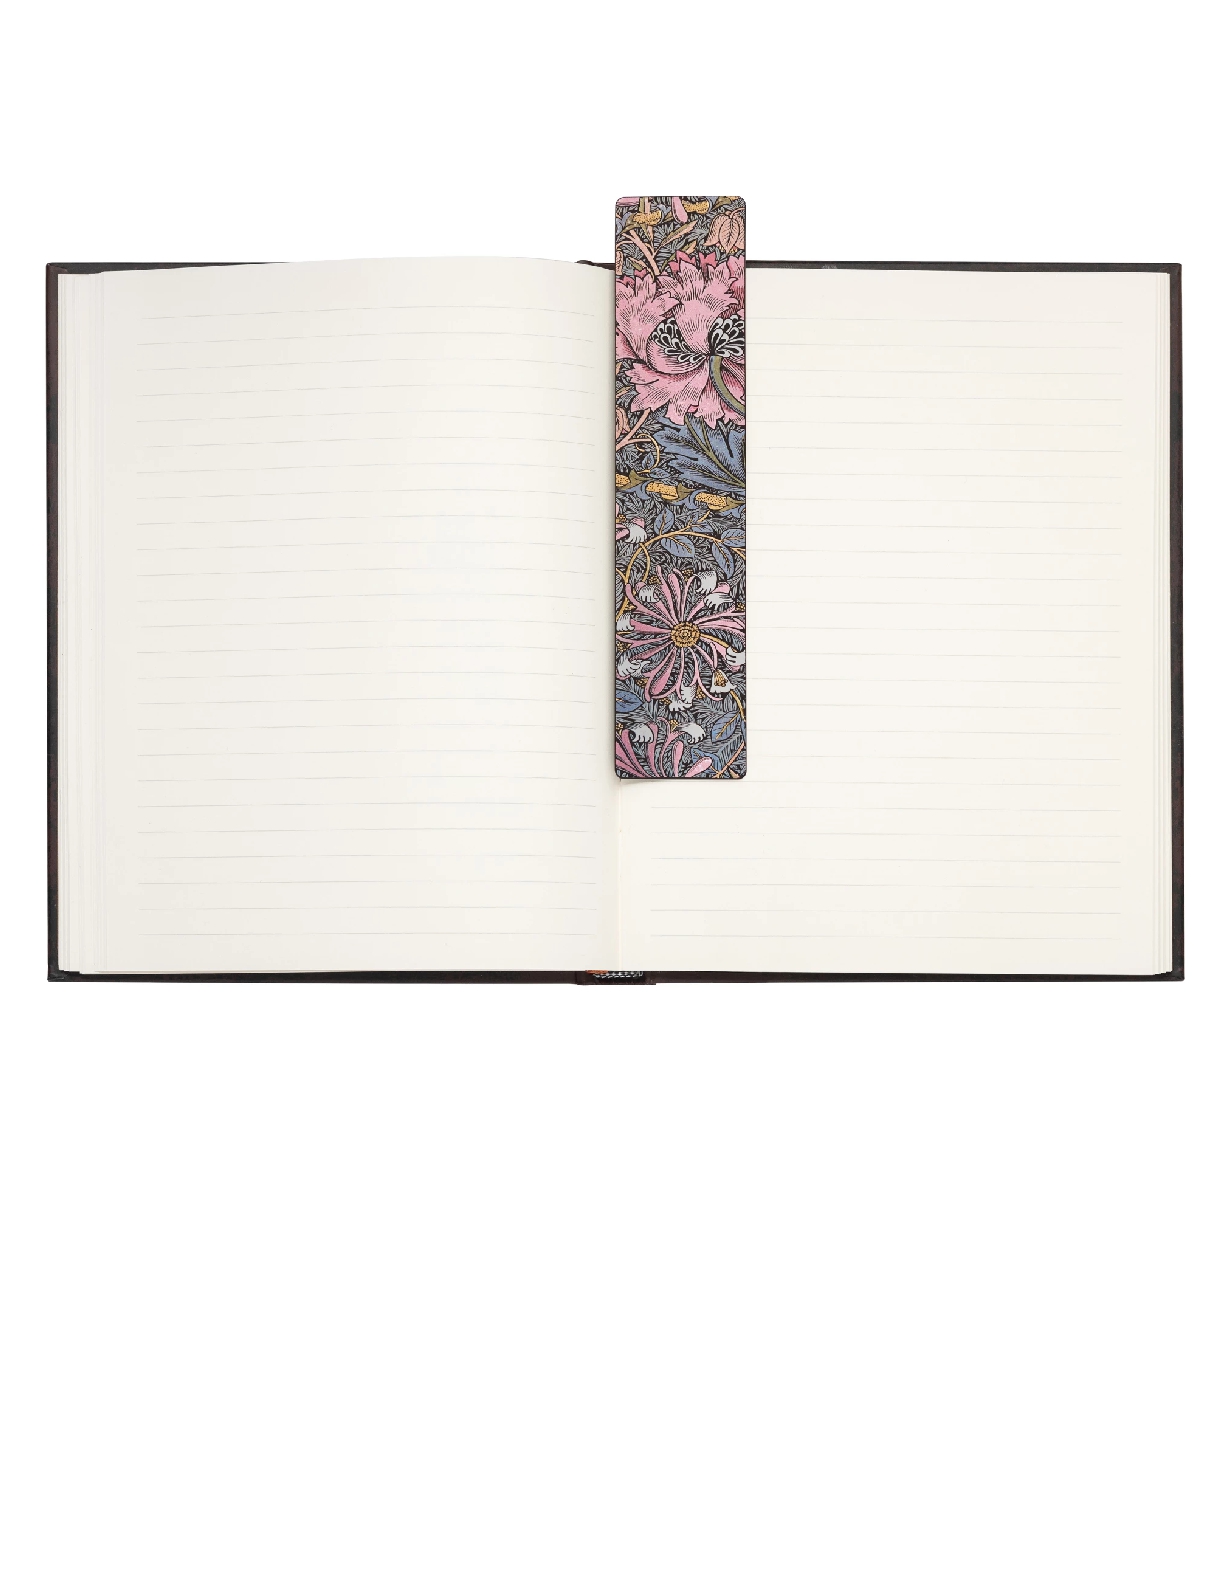 Morris Pink Honeysuckle, William Morris, Bookmark